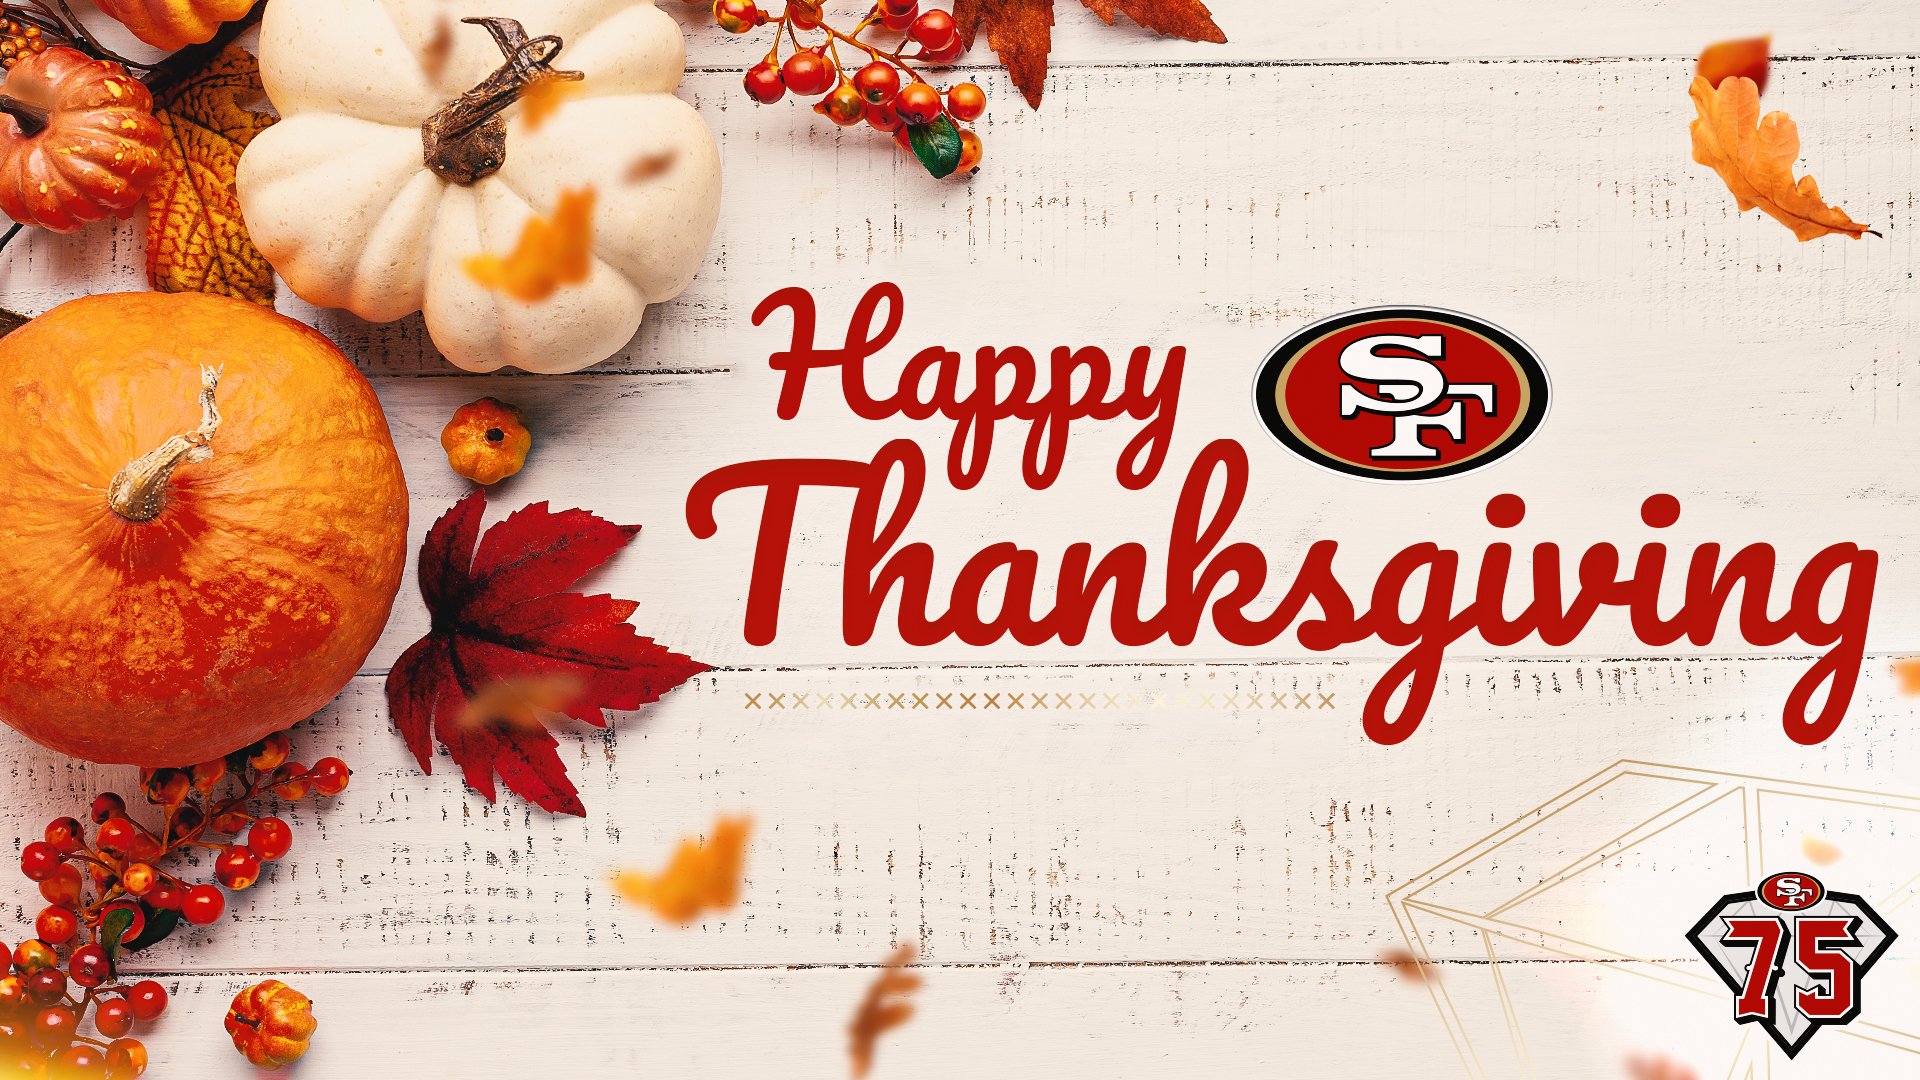 San Francisco 49ers on X: 'Happy Thanksgiving Faithful! 